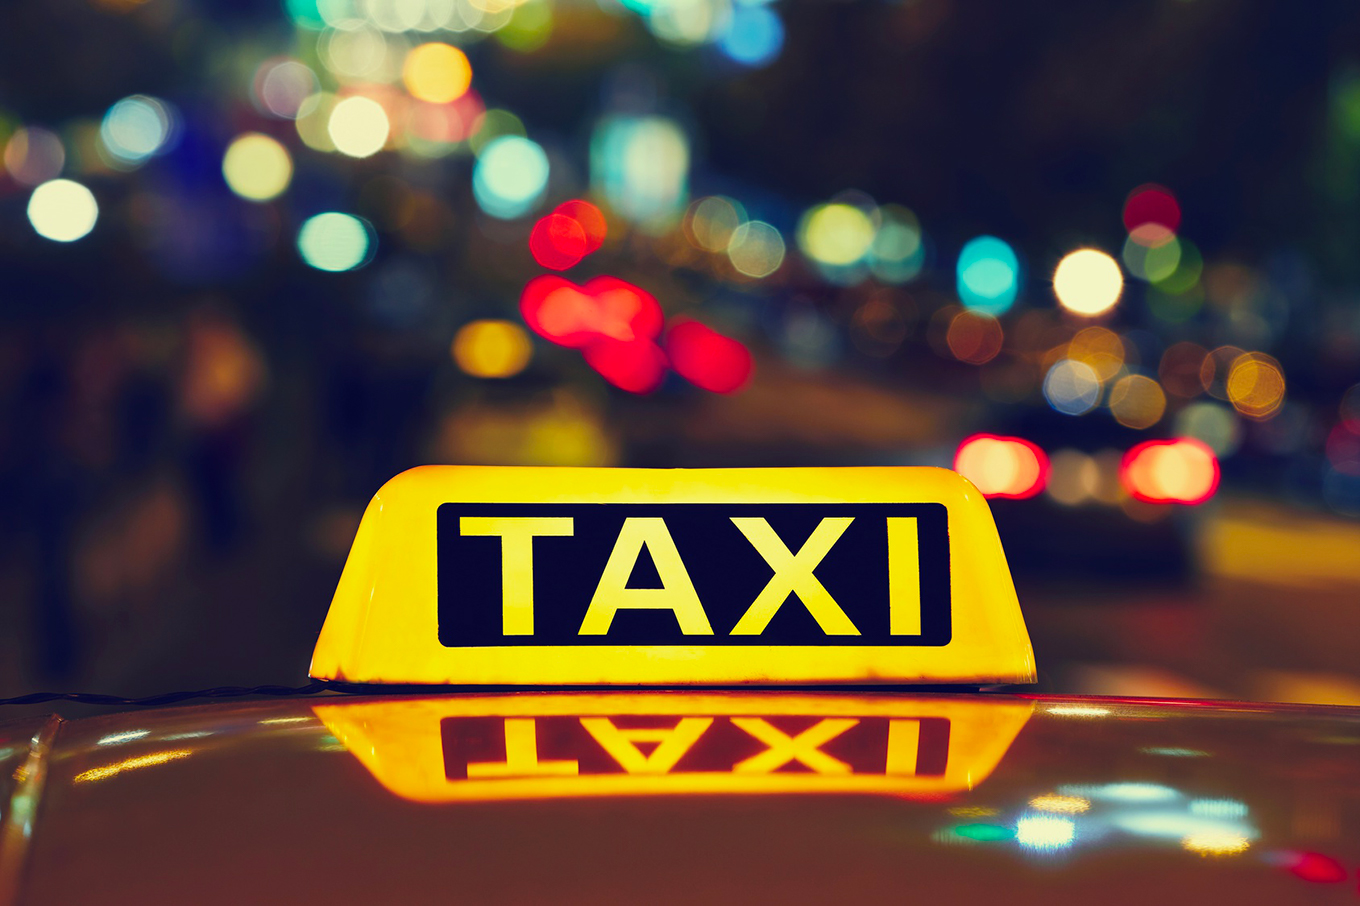 Illustration enseigne lumineuse avec mention taxi